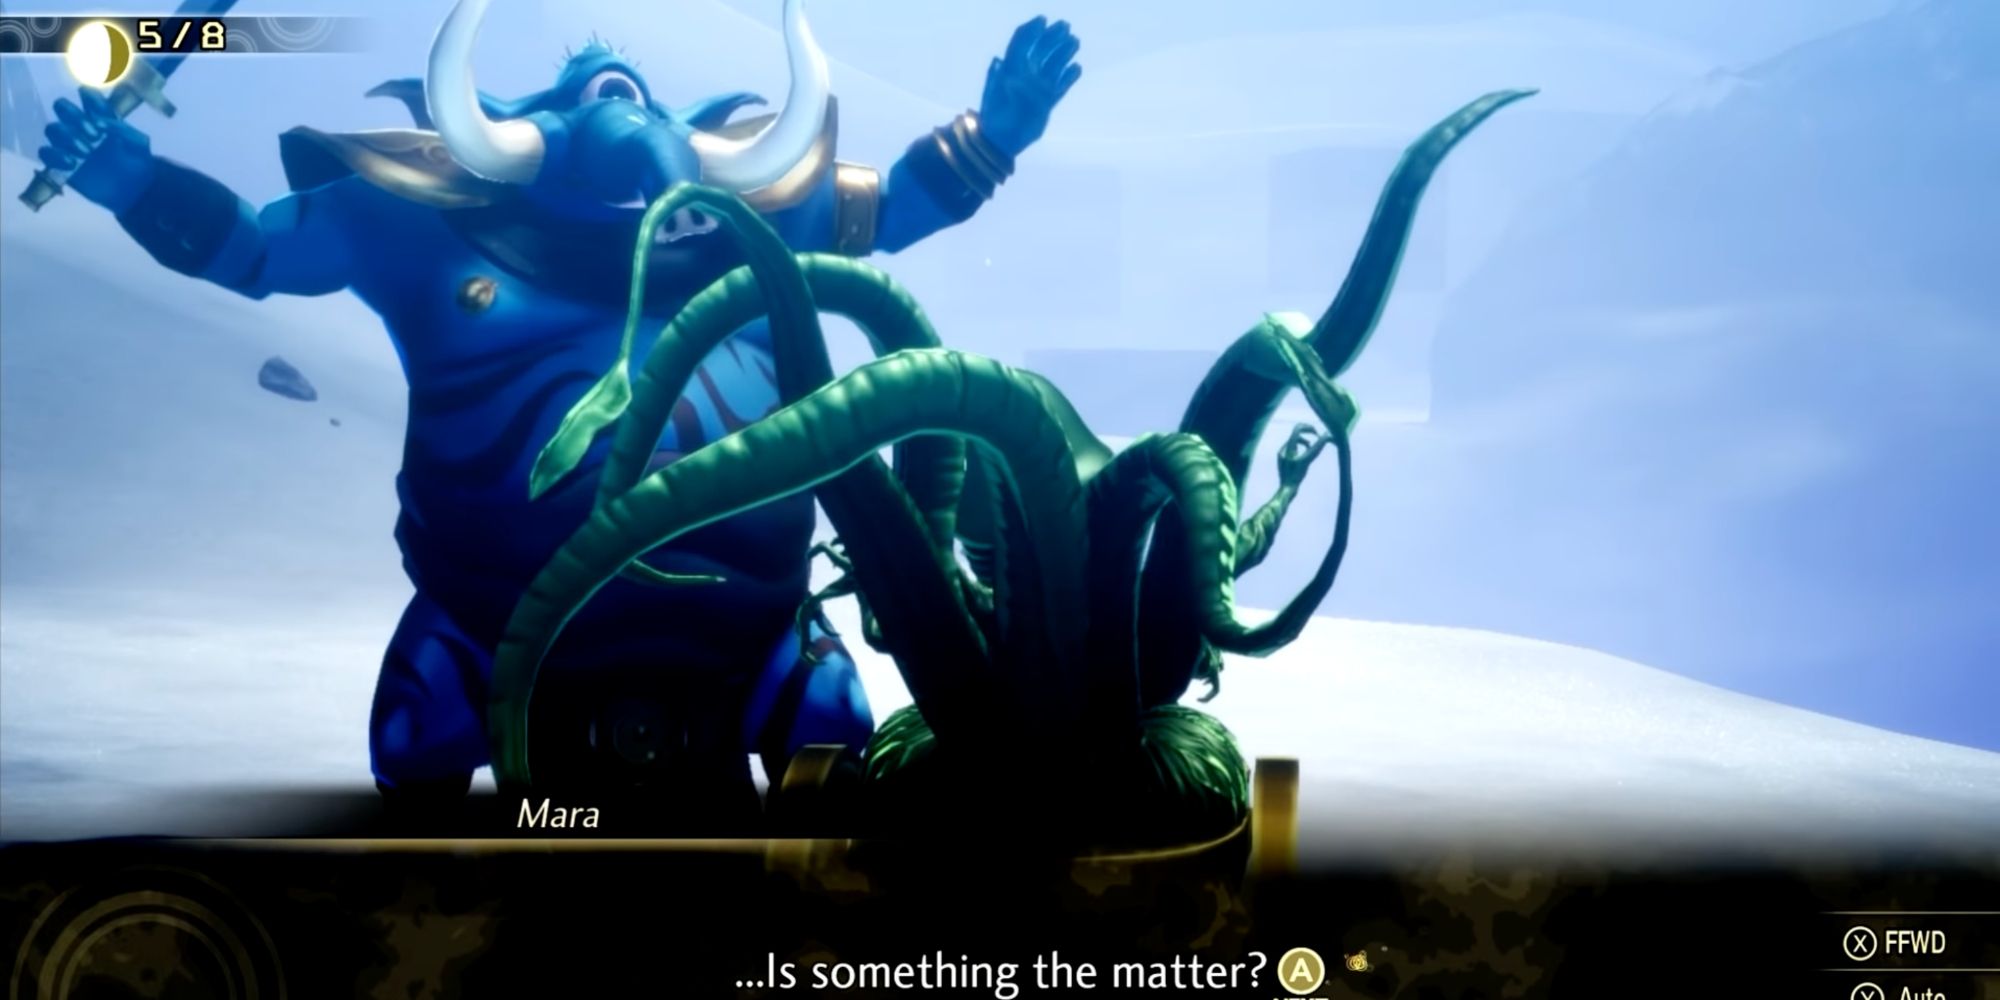 Mara asks Girimekhala if something is the matter in Shin Megami Tensei 5